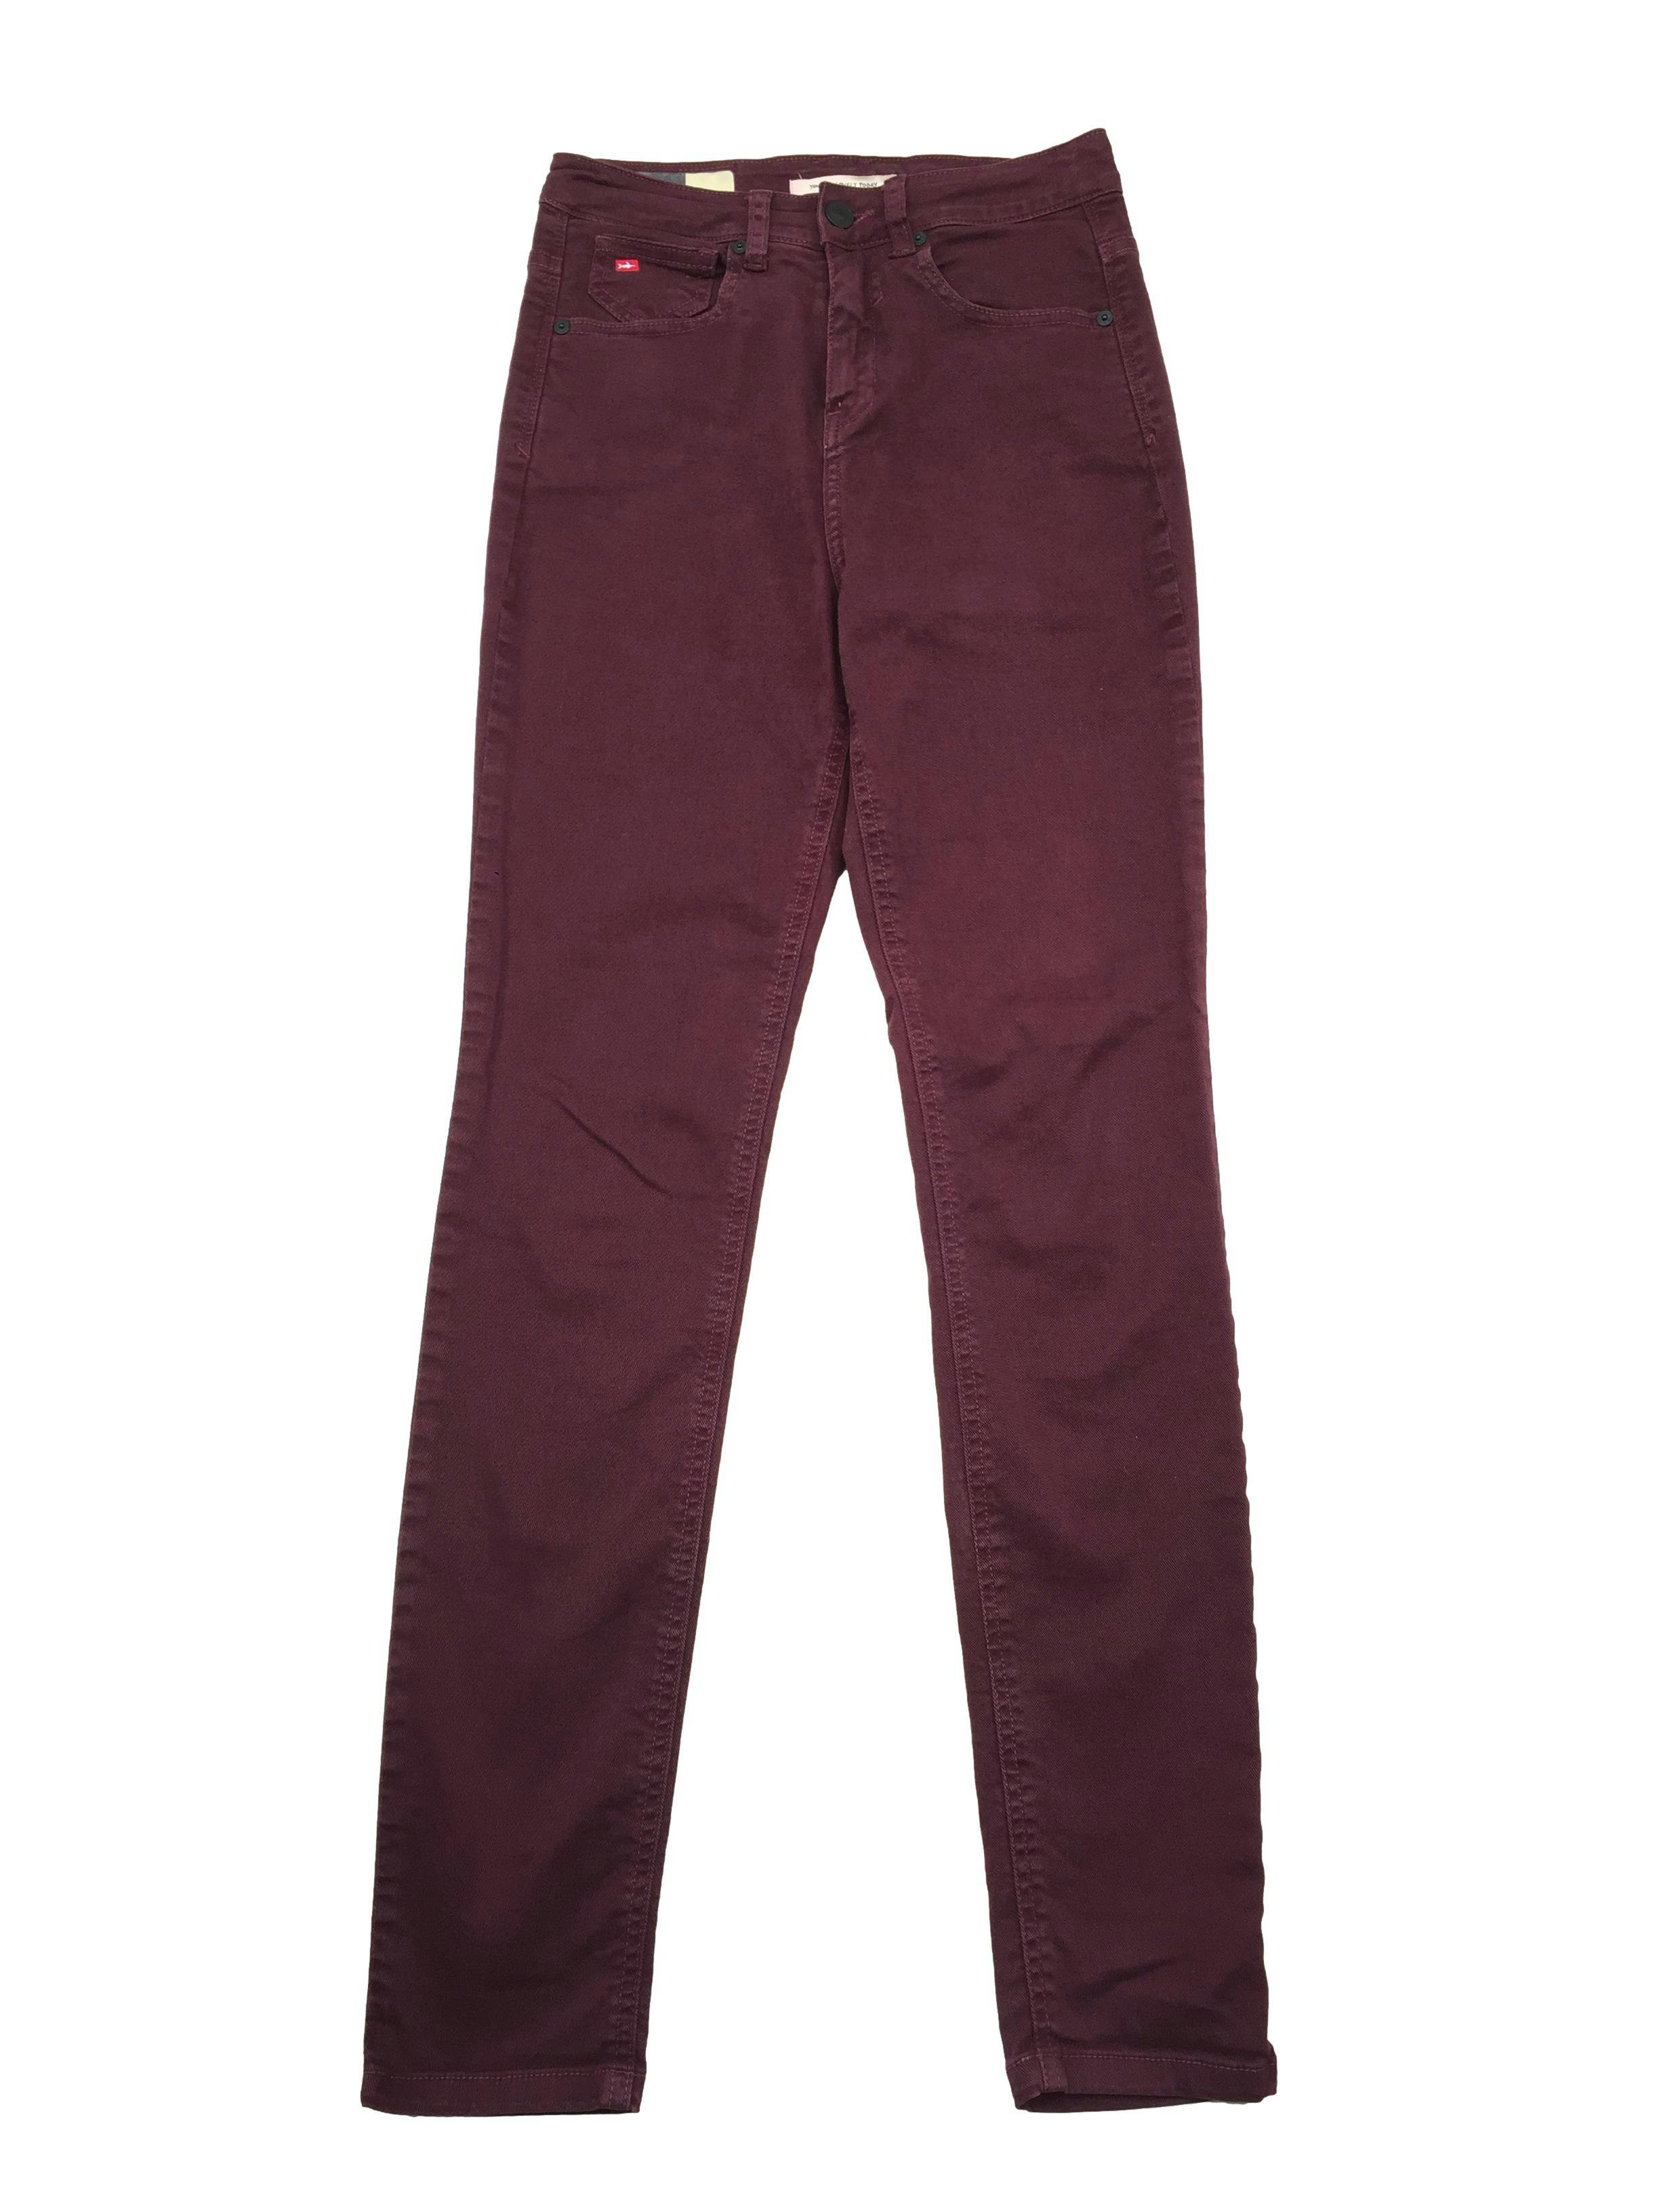 Skinny jean Kidsmadehere color vino efecto lavado, five-pockets. Cintura 68cm, Tiro 28cm, Largo 100cm.